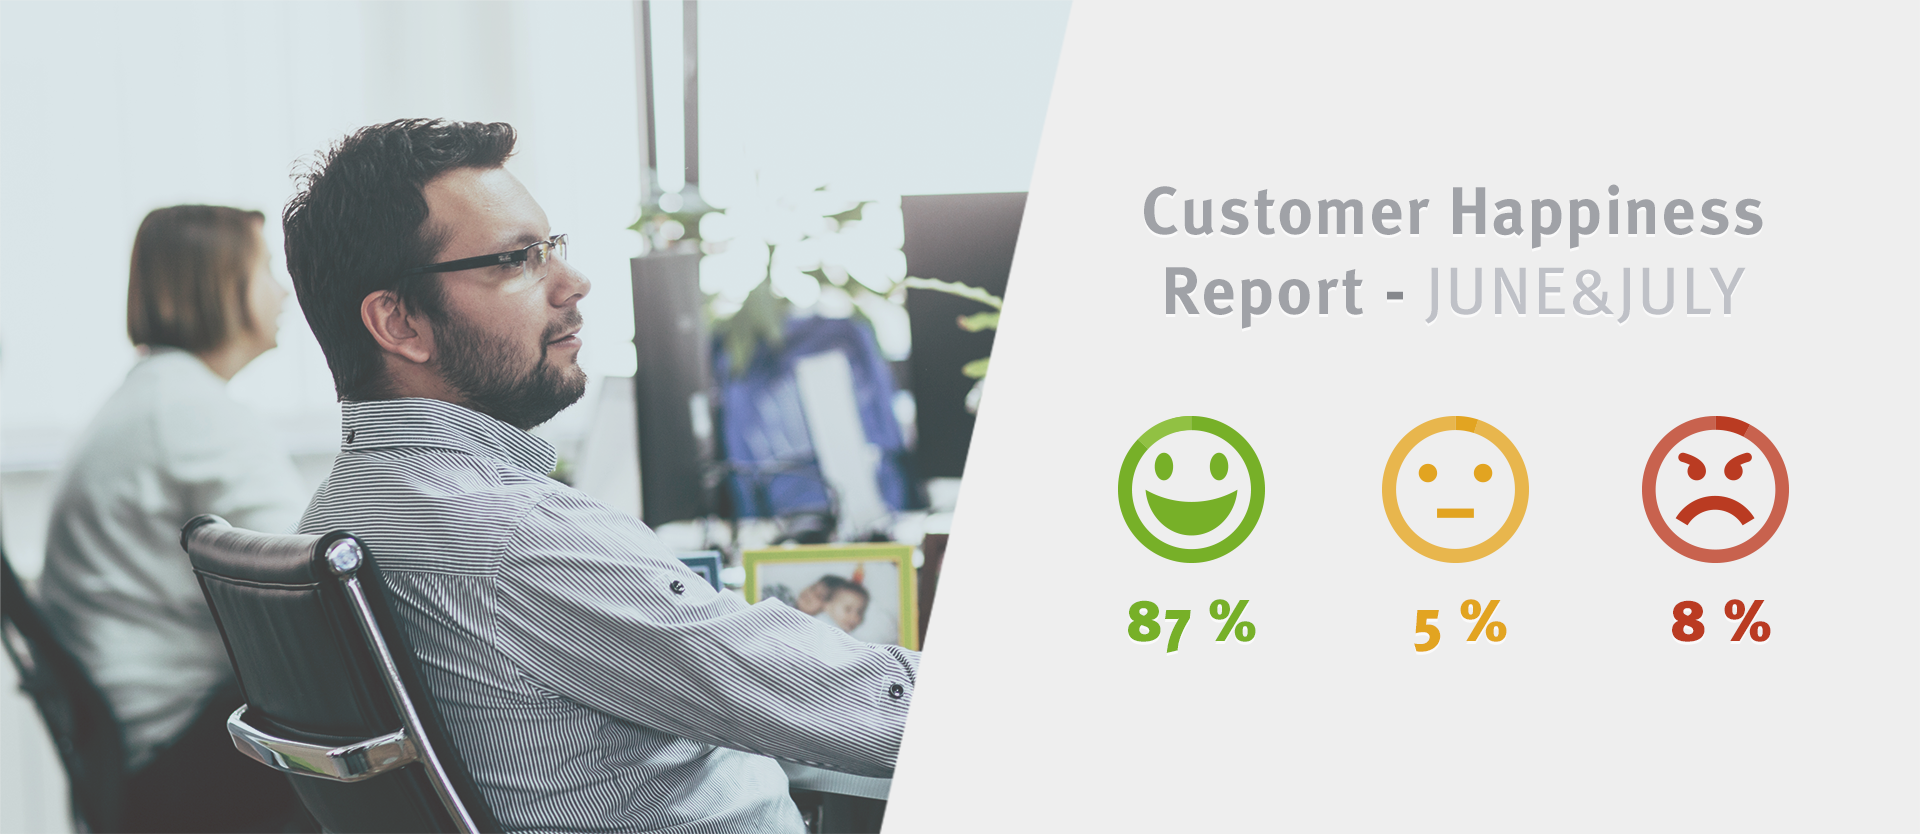 Customer Happiness Report June & July